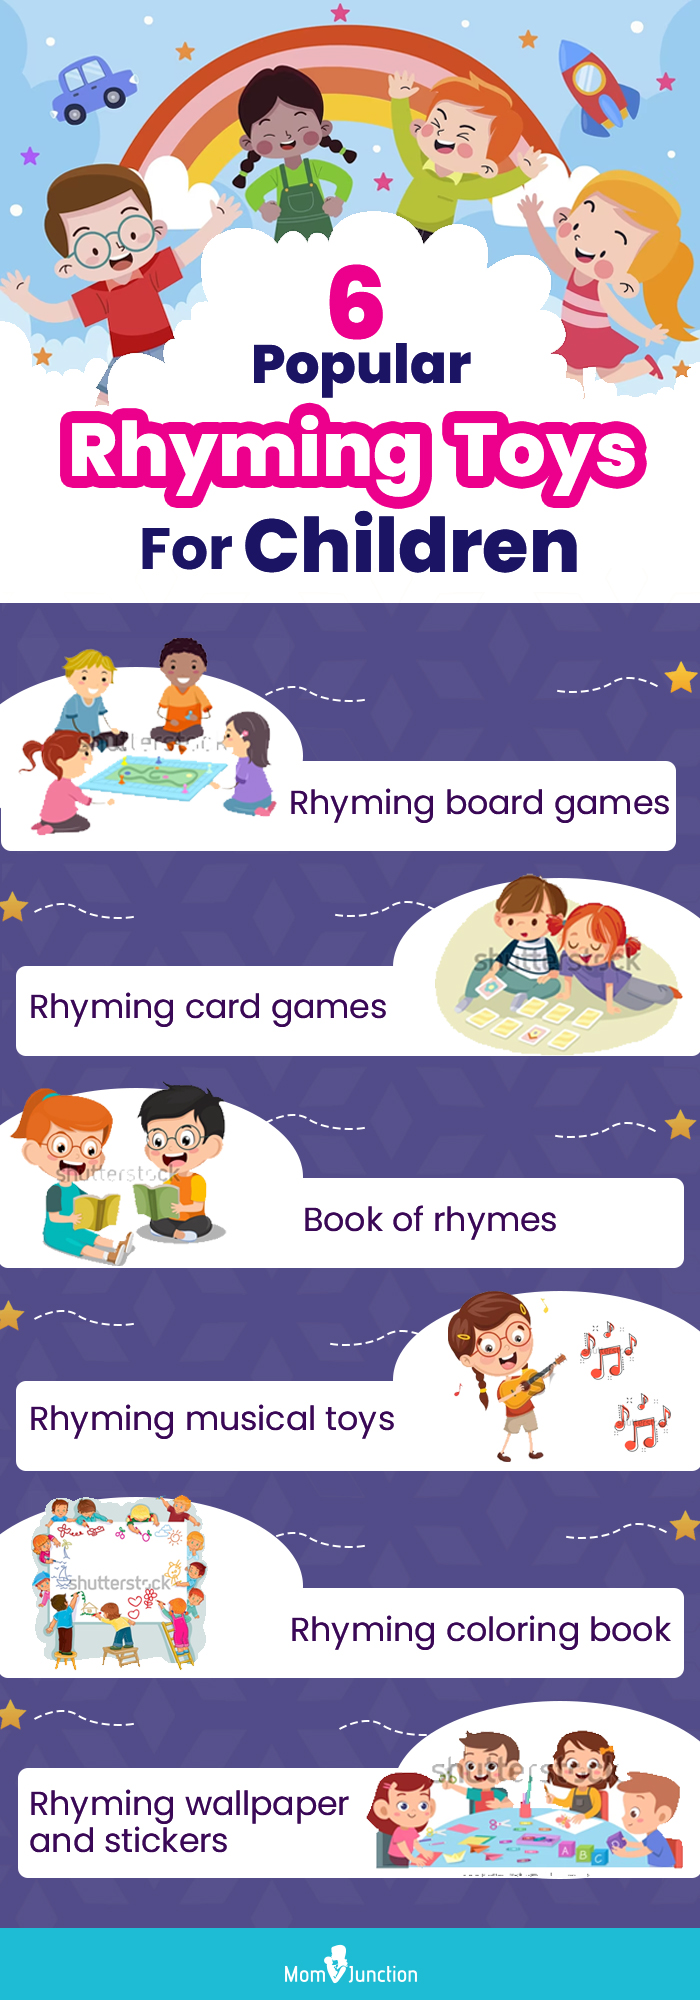 6 popular rhyming toys for children (infographic)